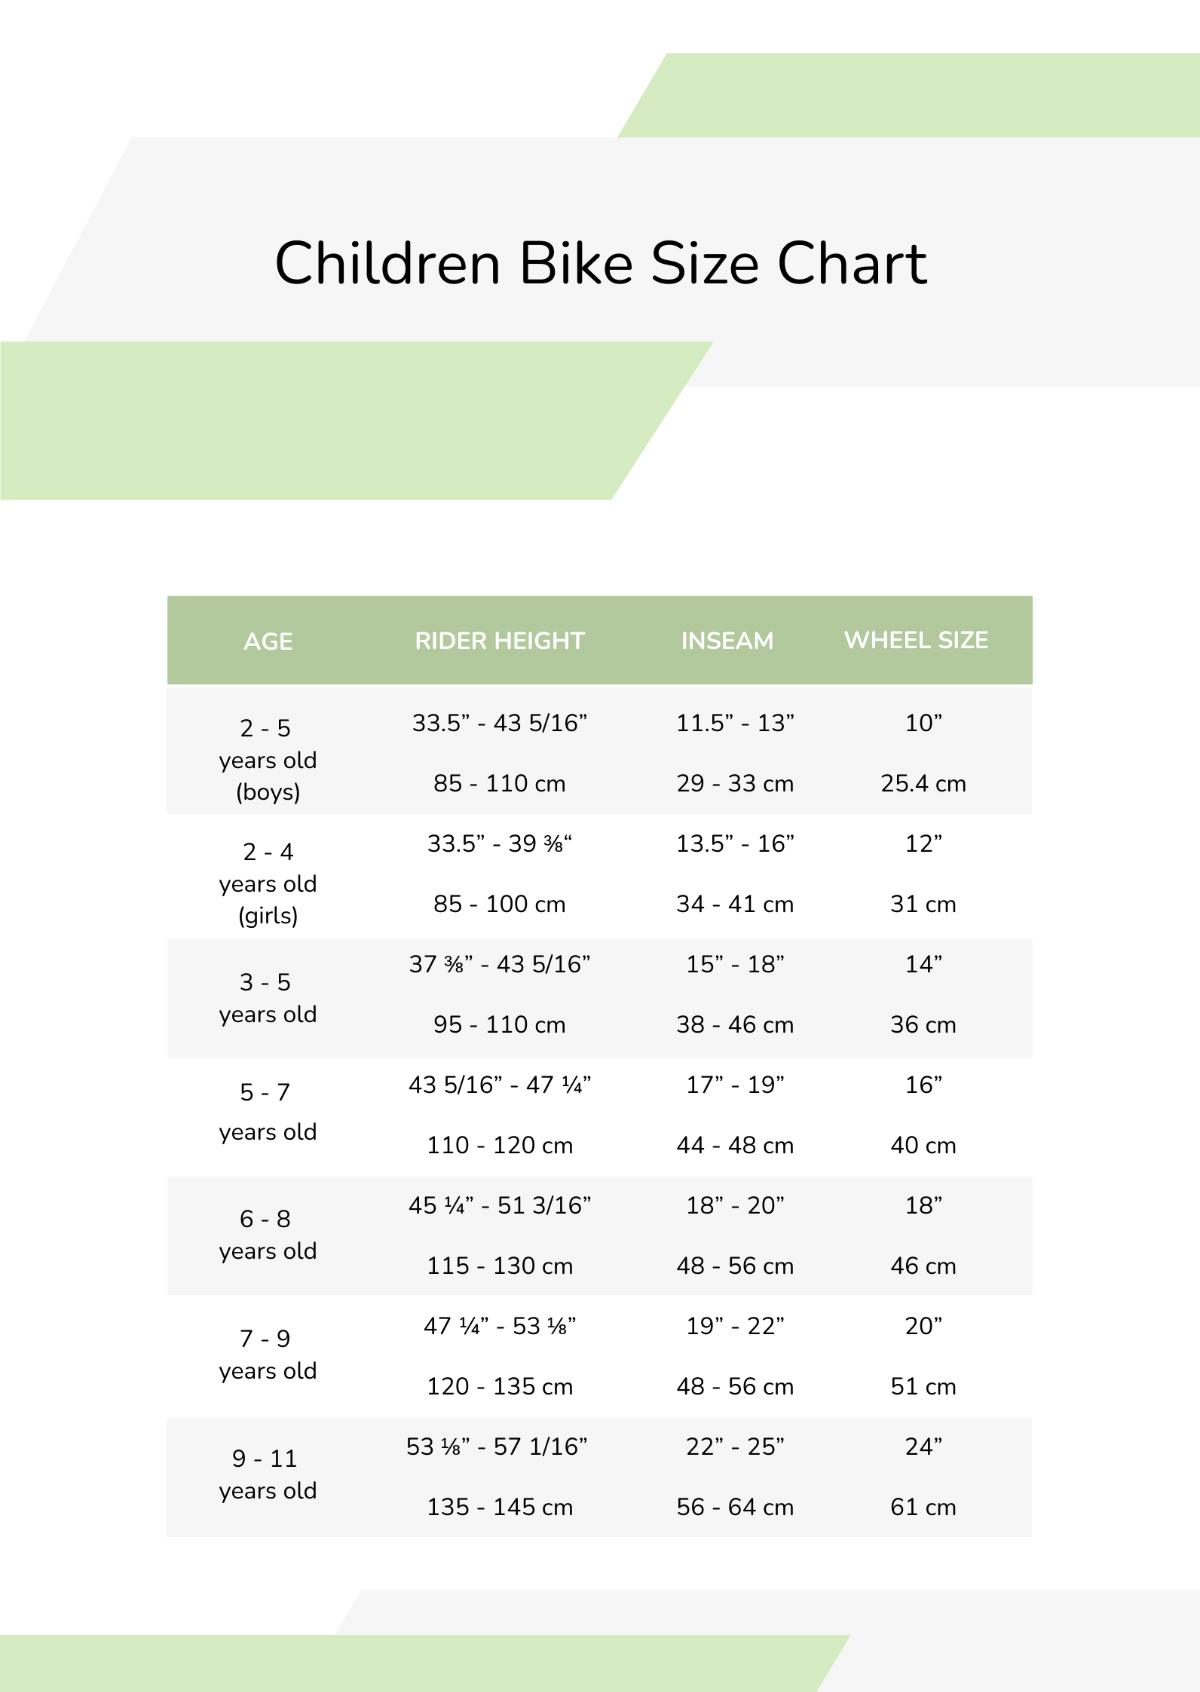 Children Bike Size Chart Template